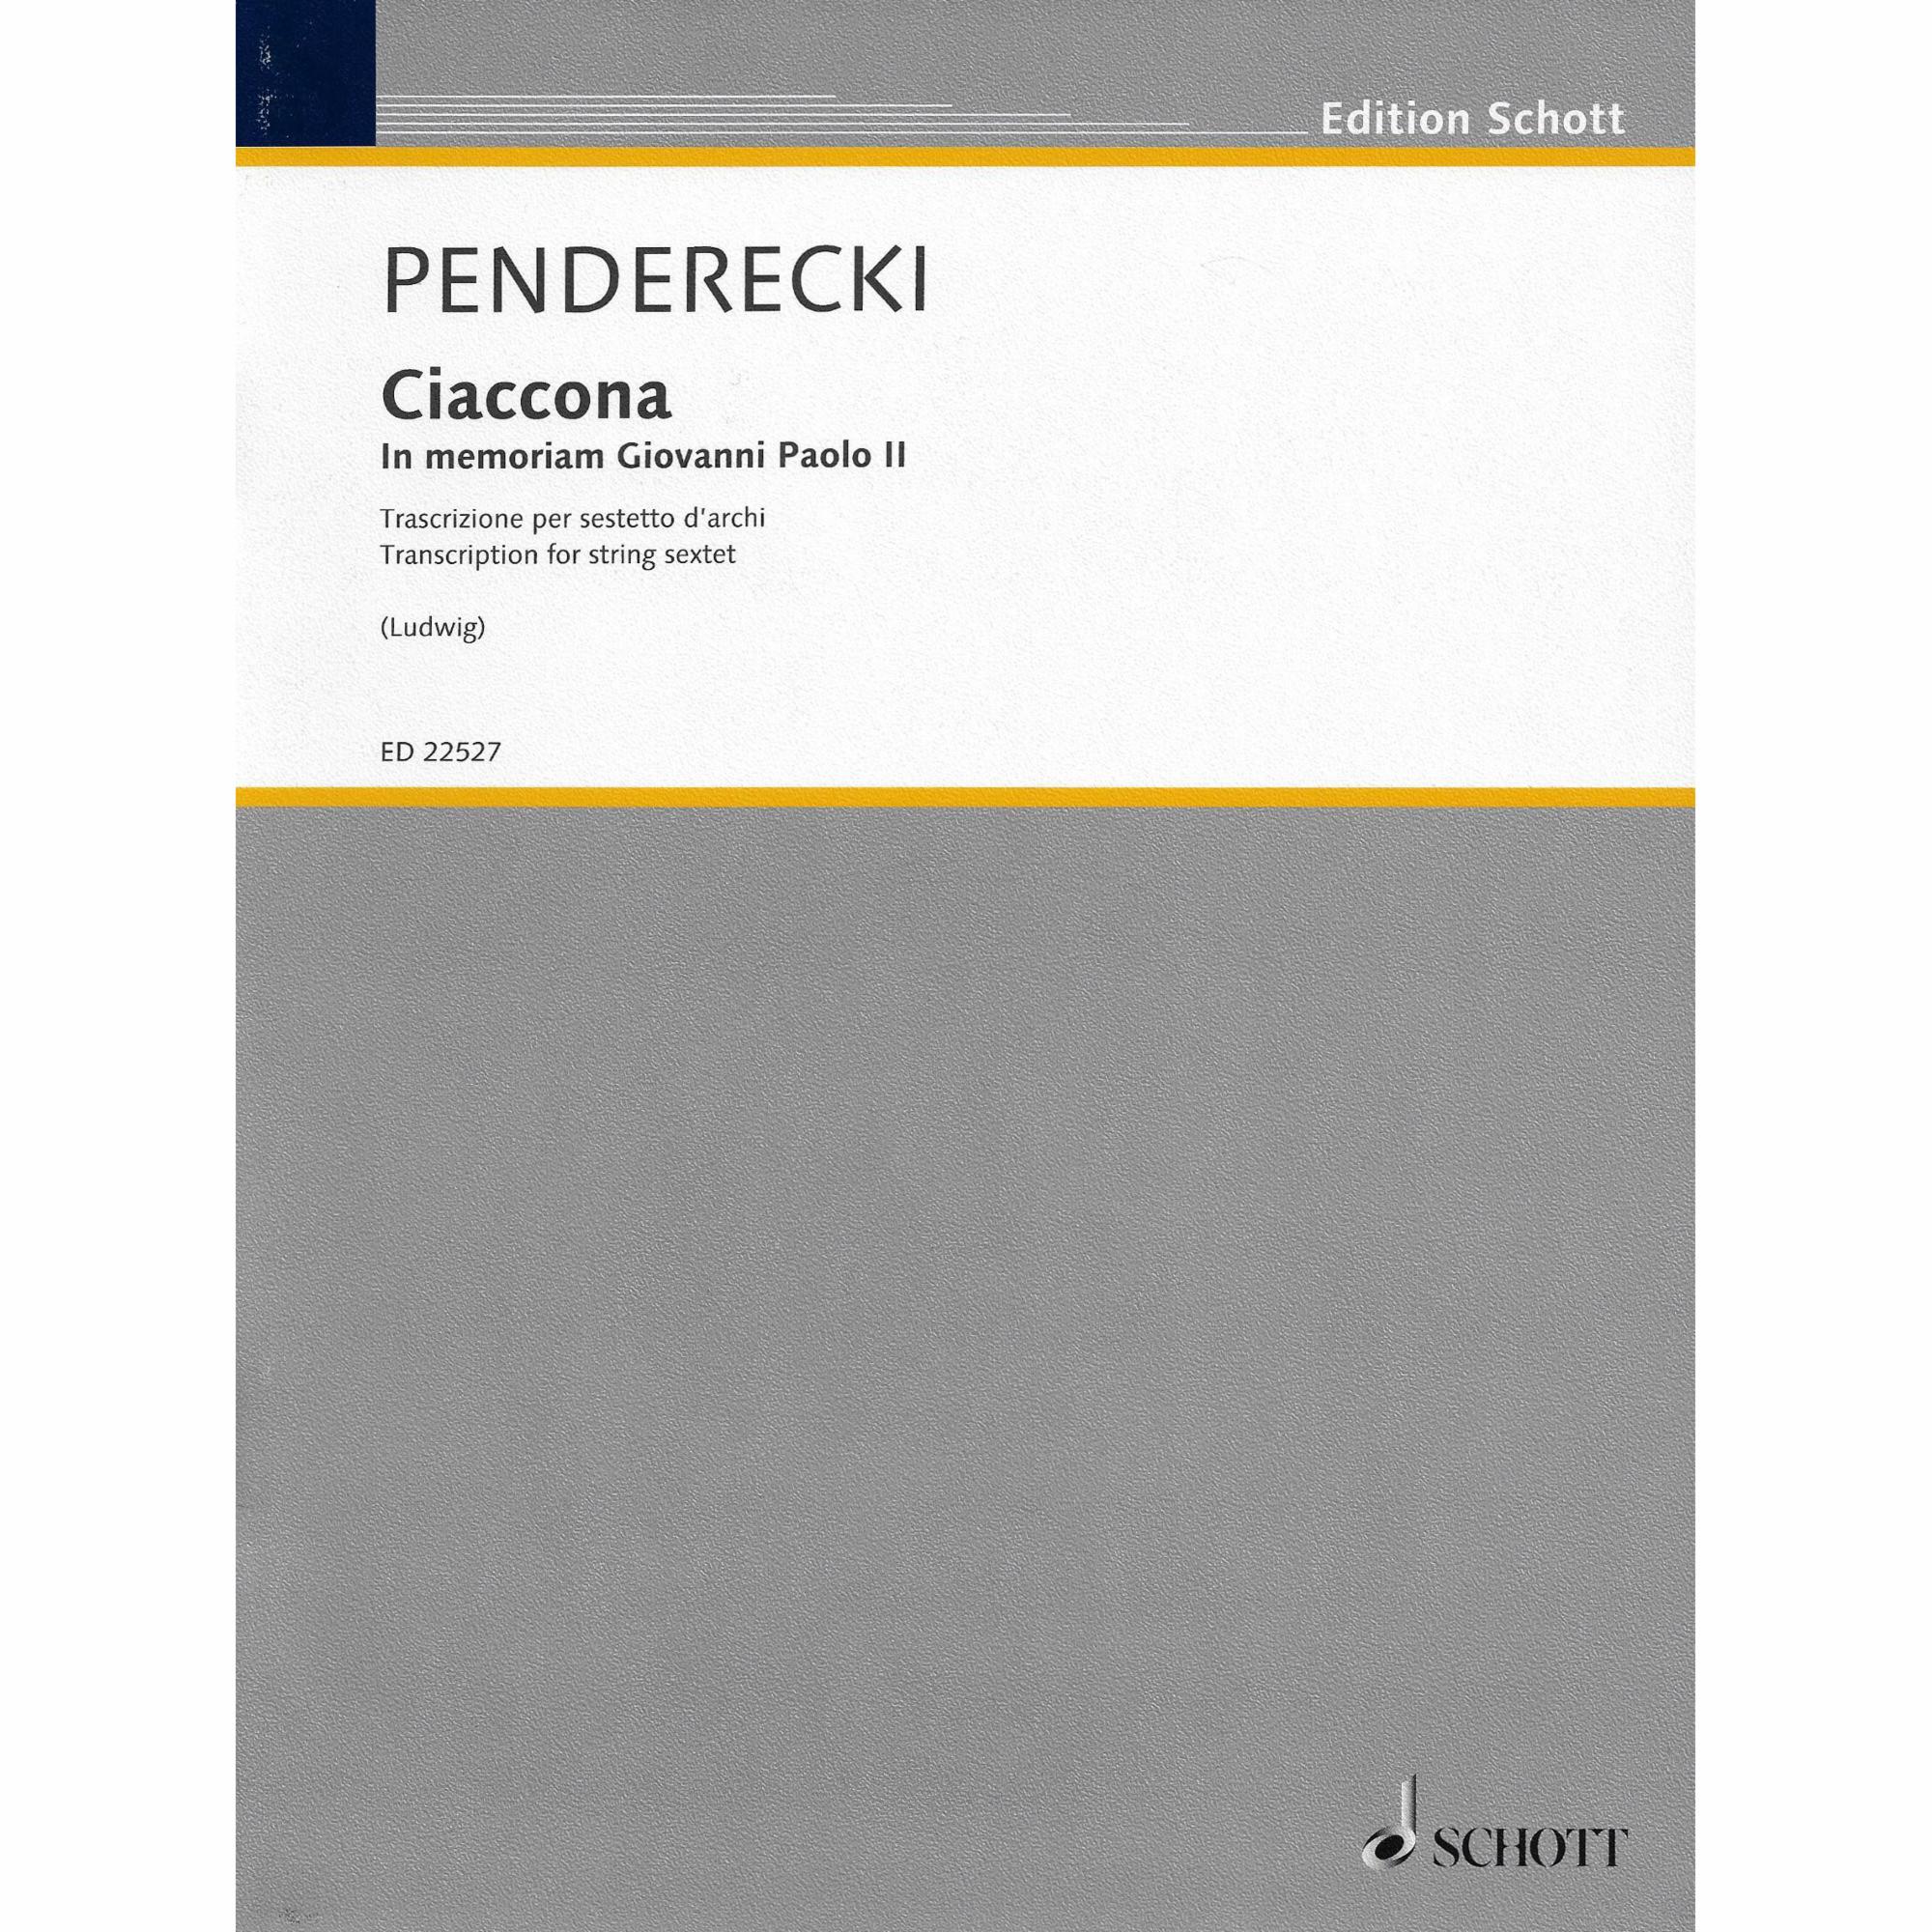 Penderecki -- Ciaccona for String Sextet